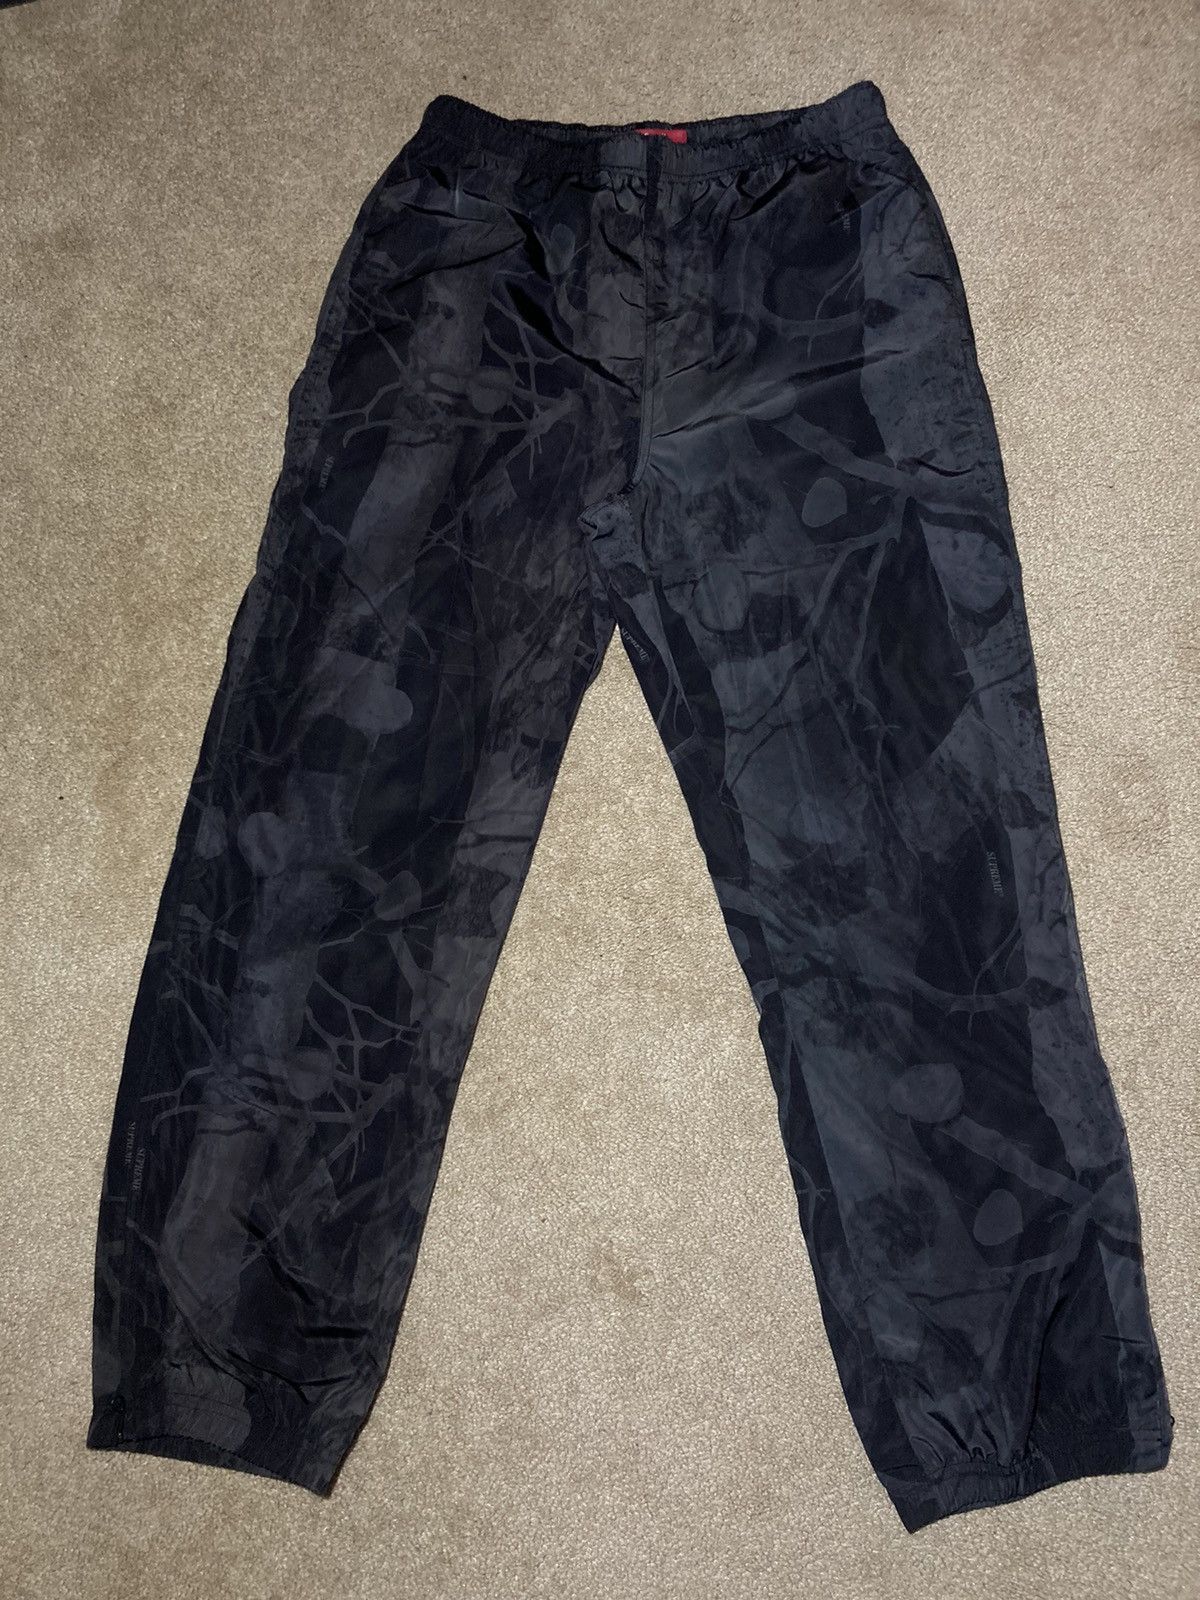 SS14 Supreme Aspen Camo Pants Woodland Camouflage 2014 Track - 2